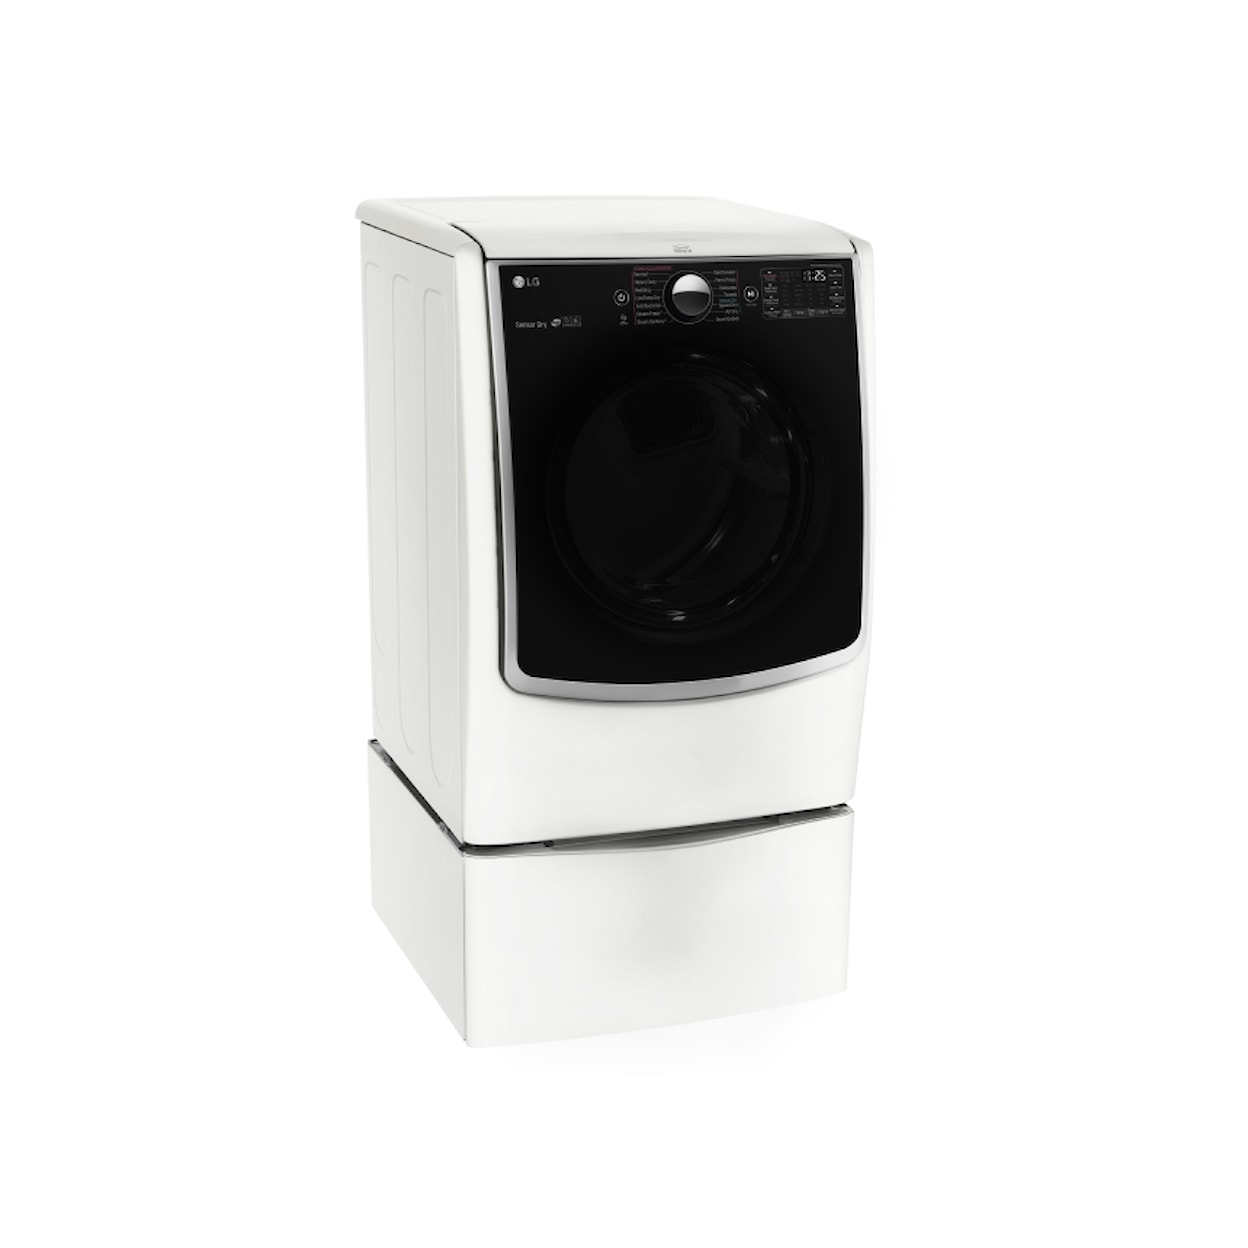 LG Appliances Dryers 7.4 Cu. Ft. Capacity Electric Dryer